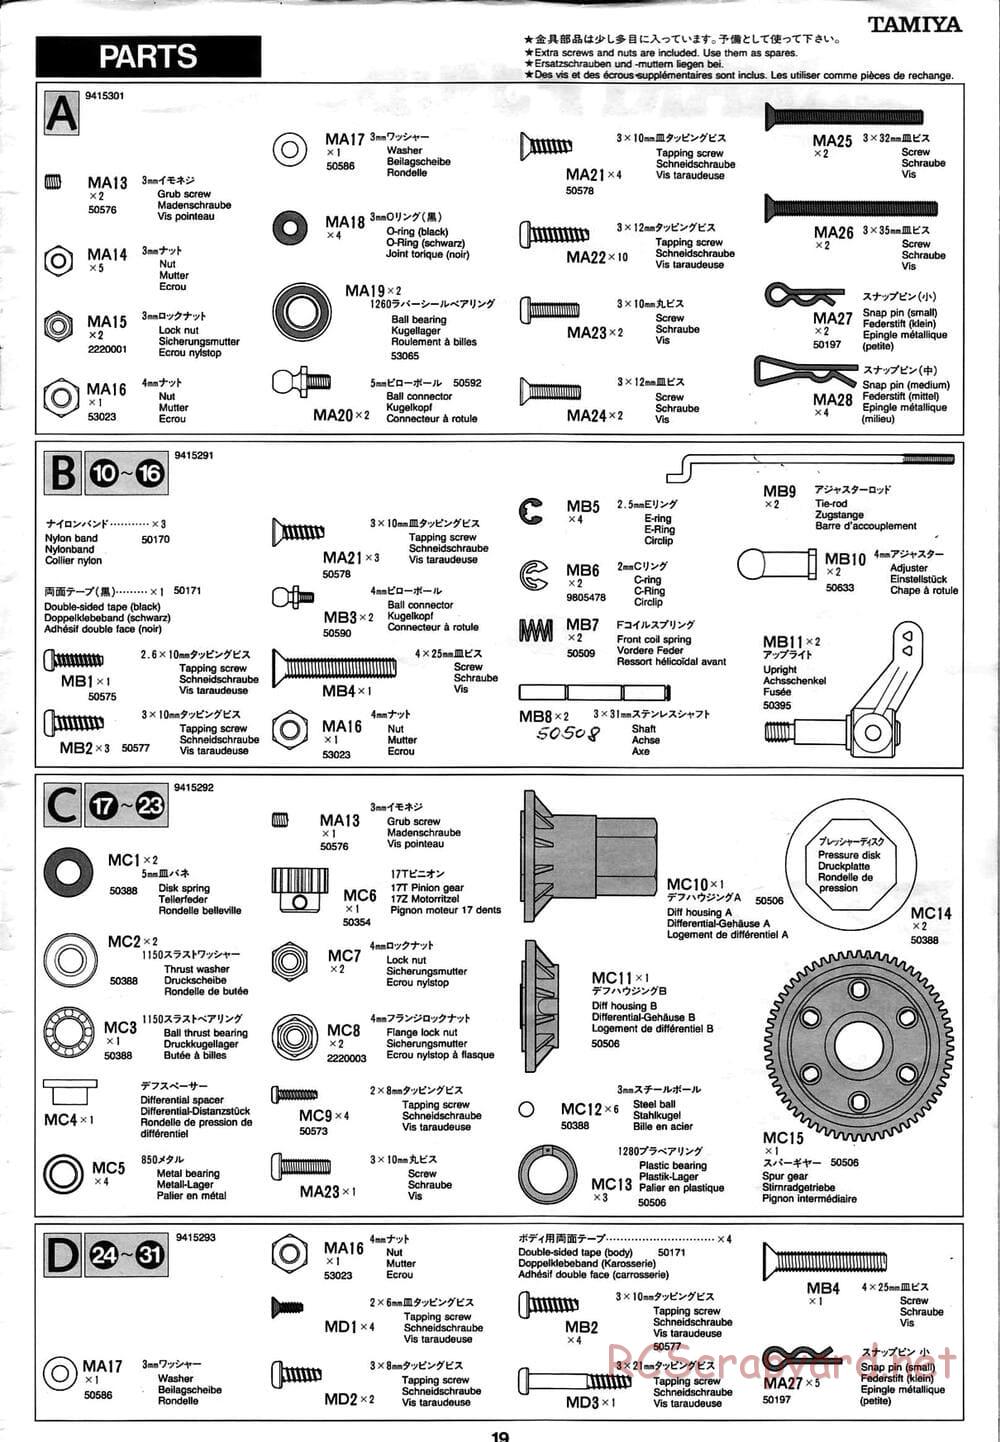 Tamiya - Ferrari F310B - F103RS Chassis - Manual - Page 19